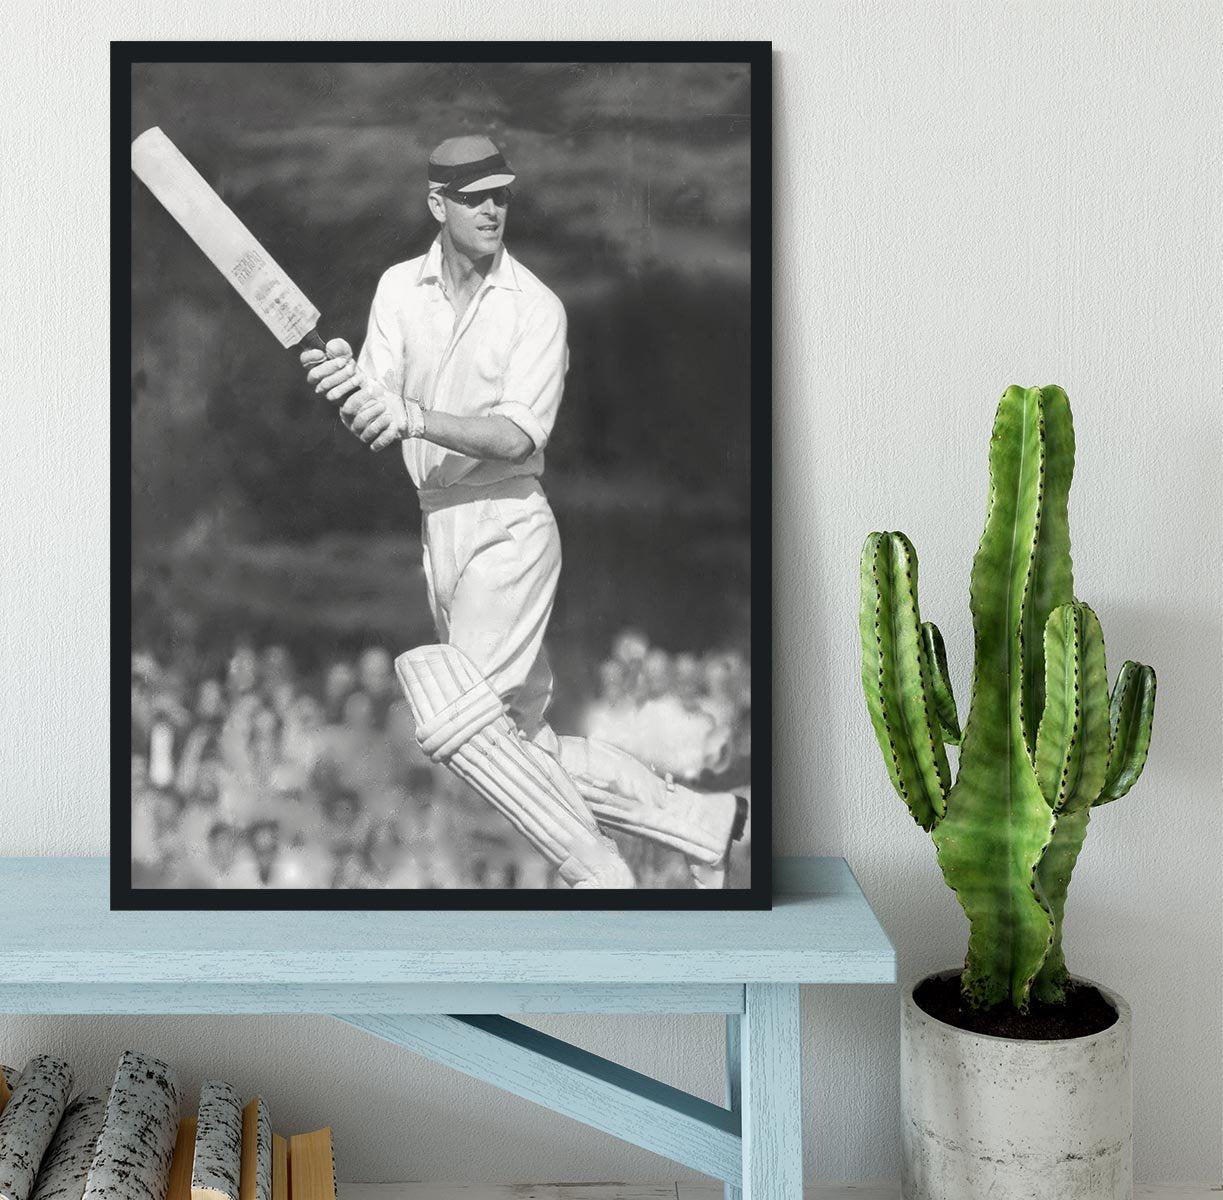 Prince Philip batting at a charity cricket match Framed Print - Canvas Art Rocks - 2